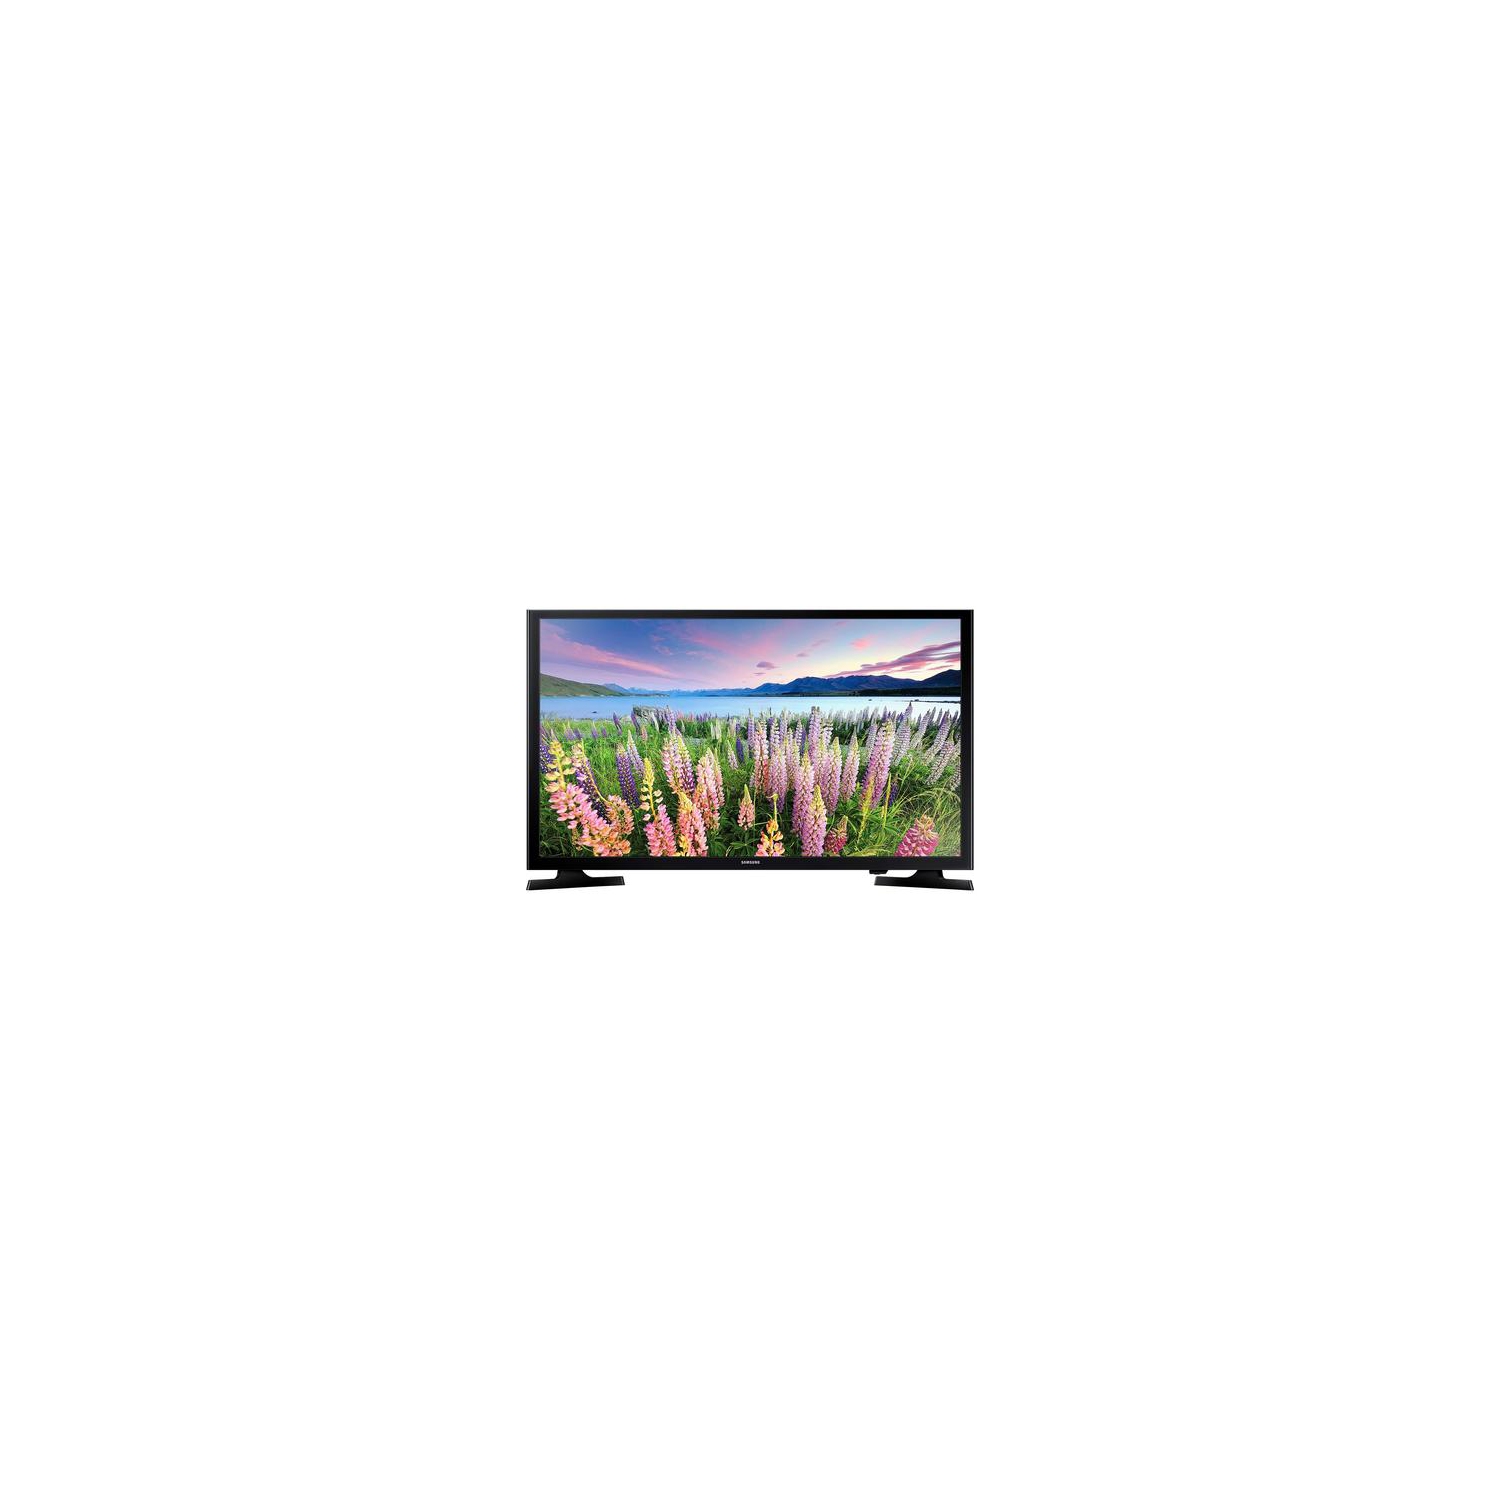 Refurbished (Good) - SAMSUNG 40" CLASS FHD (1080P) SMART LED TV ( UN40N5200 )